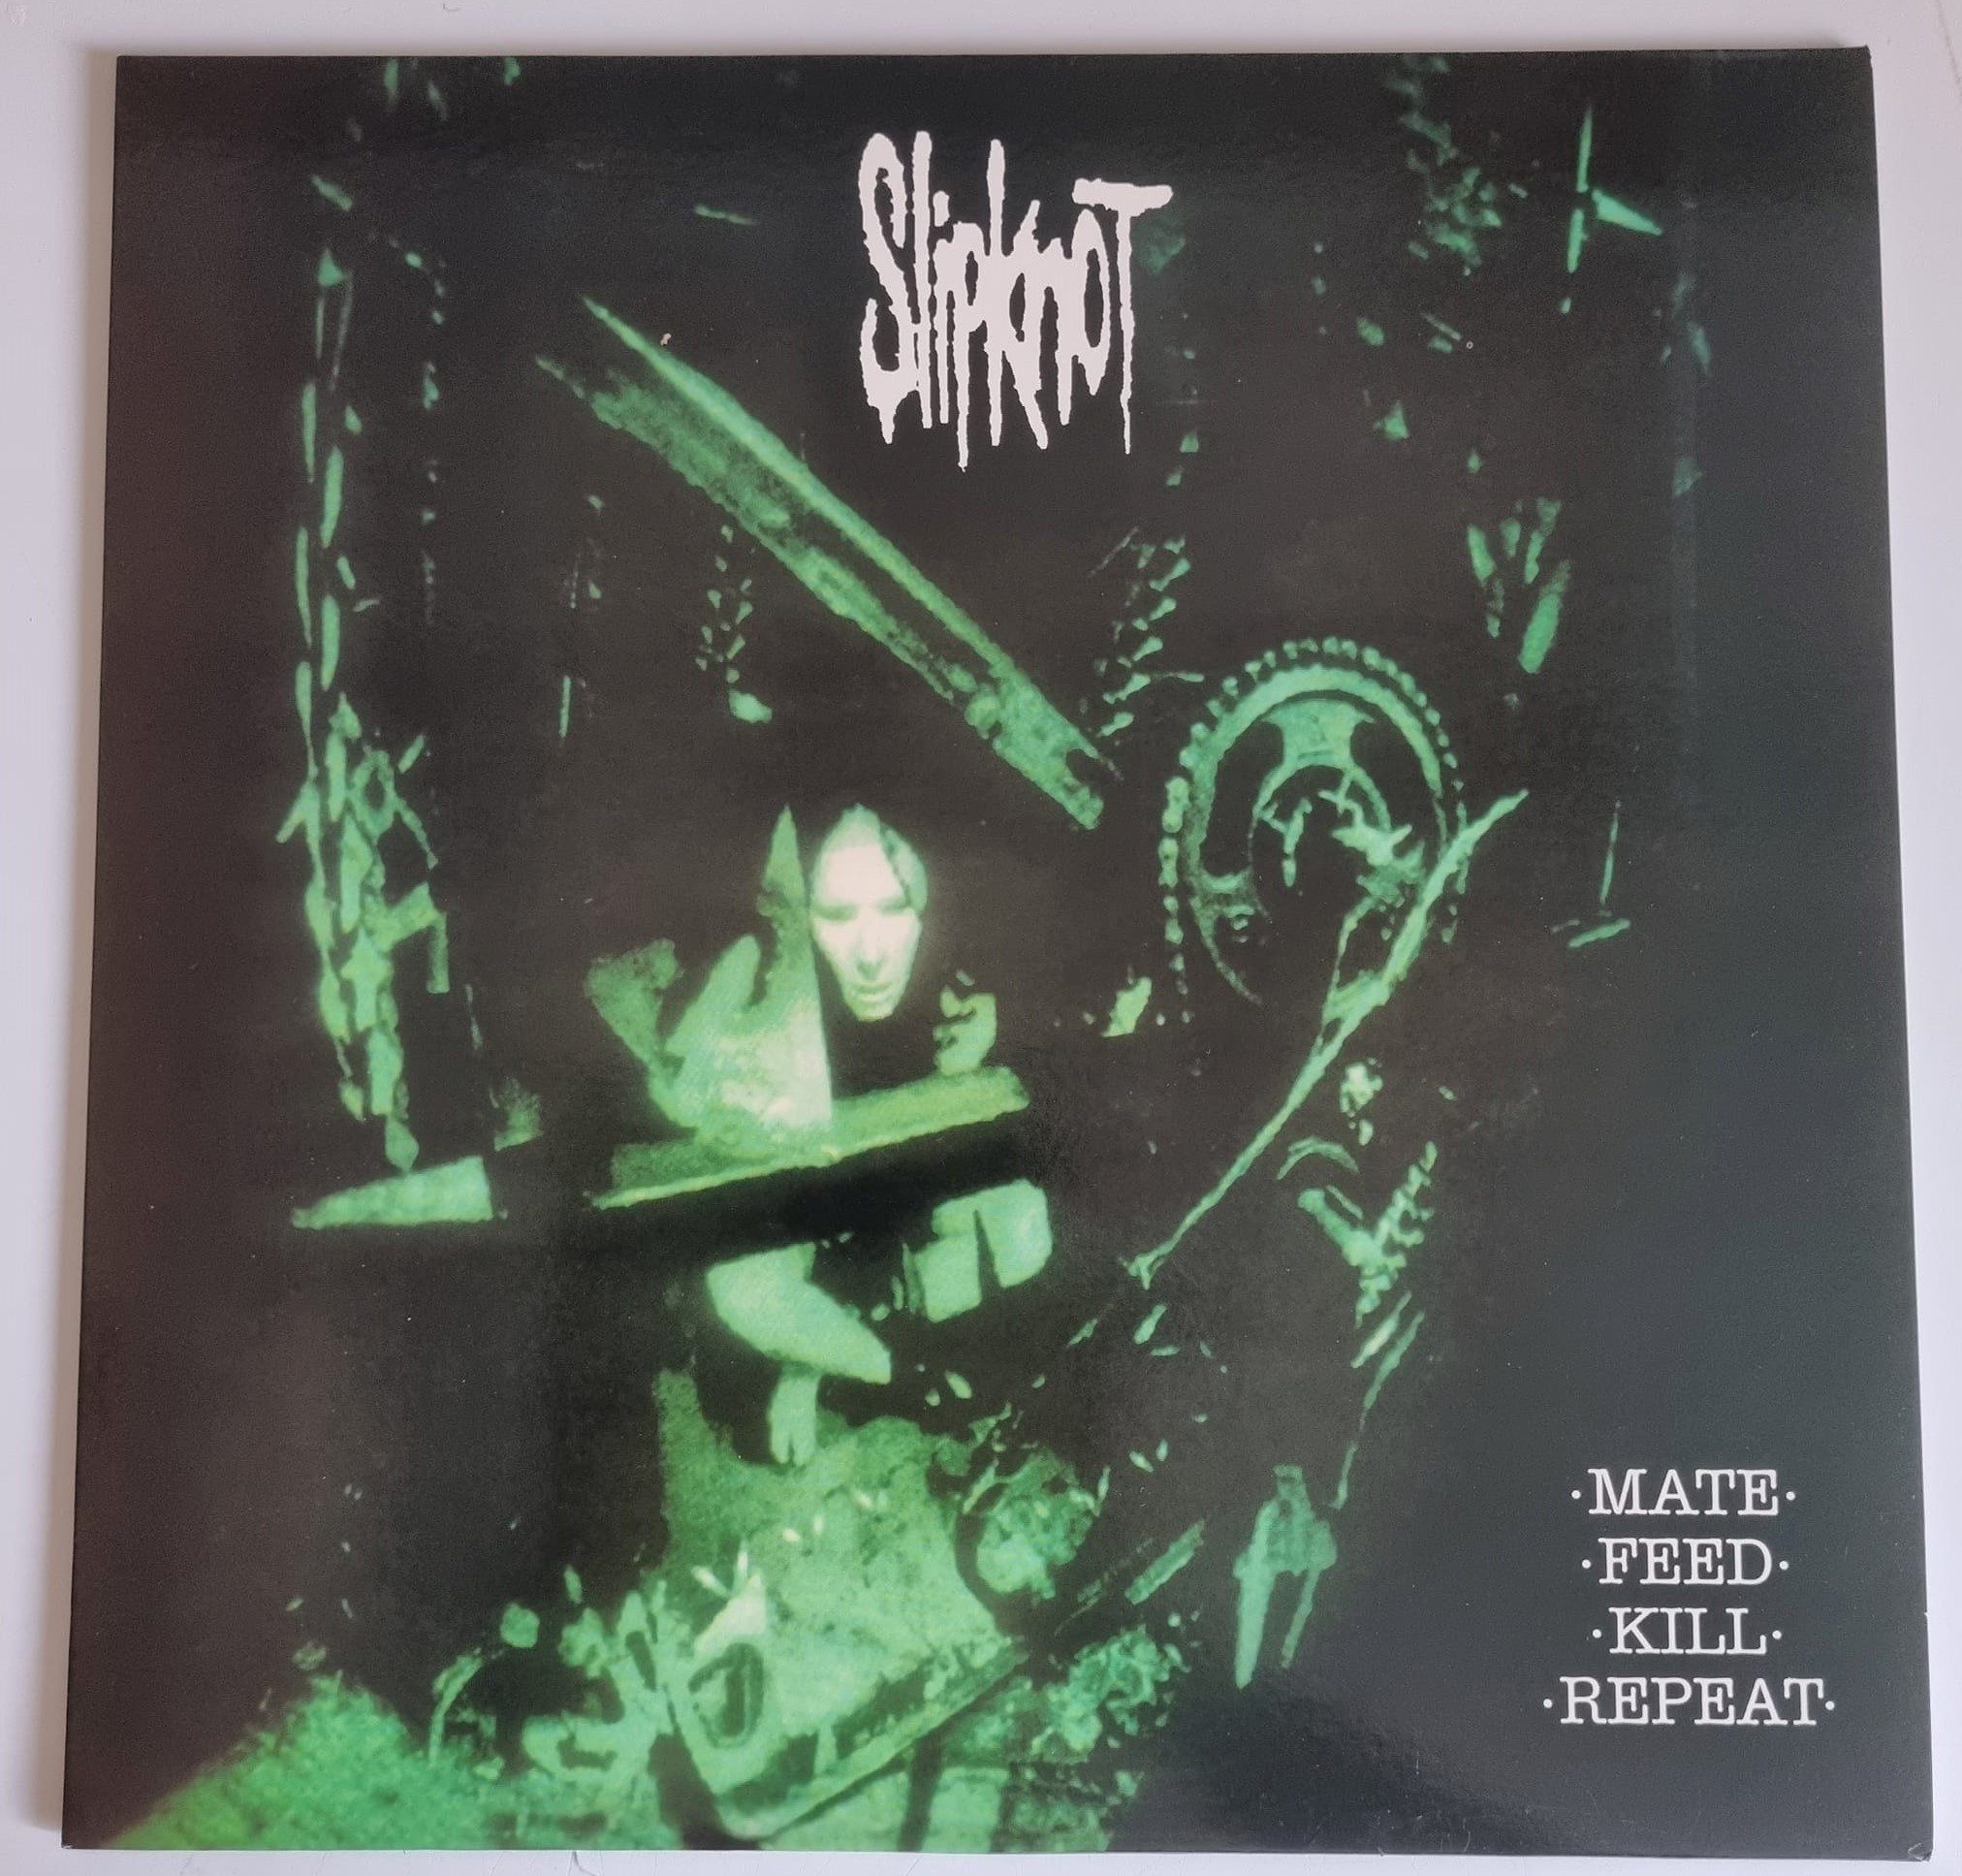 Home / Vinyl Albums / METAL / Alternative -NU Metal / Slipknot – Mate ...